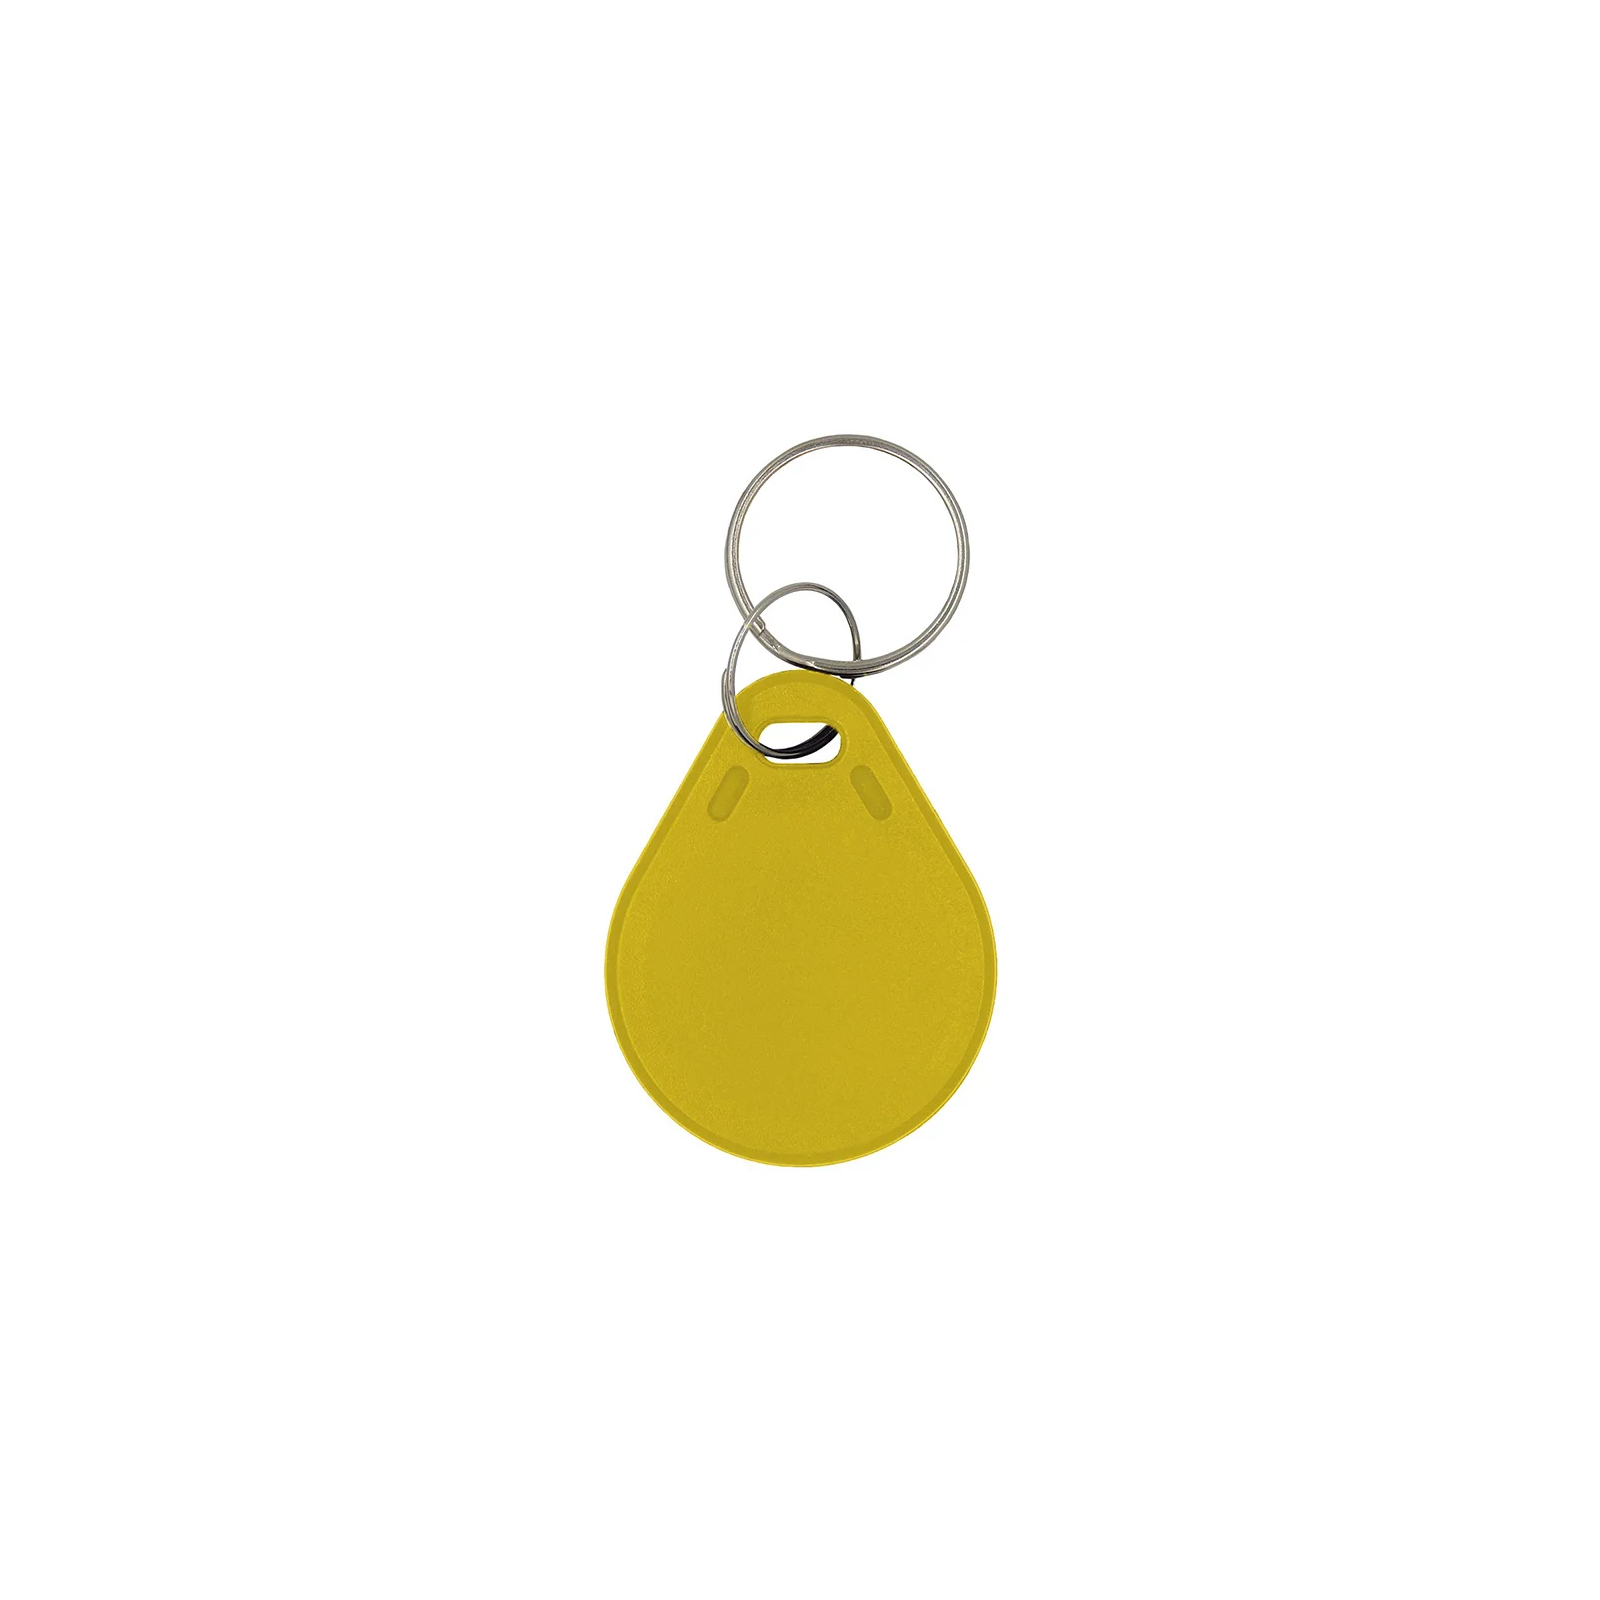 Брелок з чіпом Trinix Proxymity-key Mifare 1К yellow (P-key Mifare 1К yellow) зображення 2